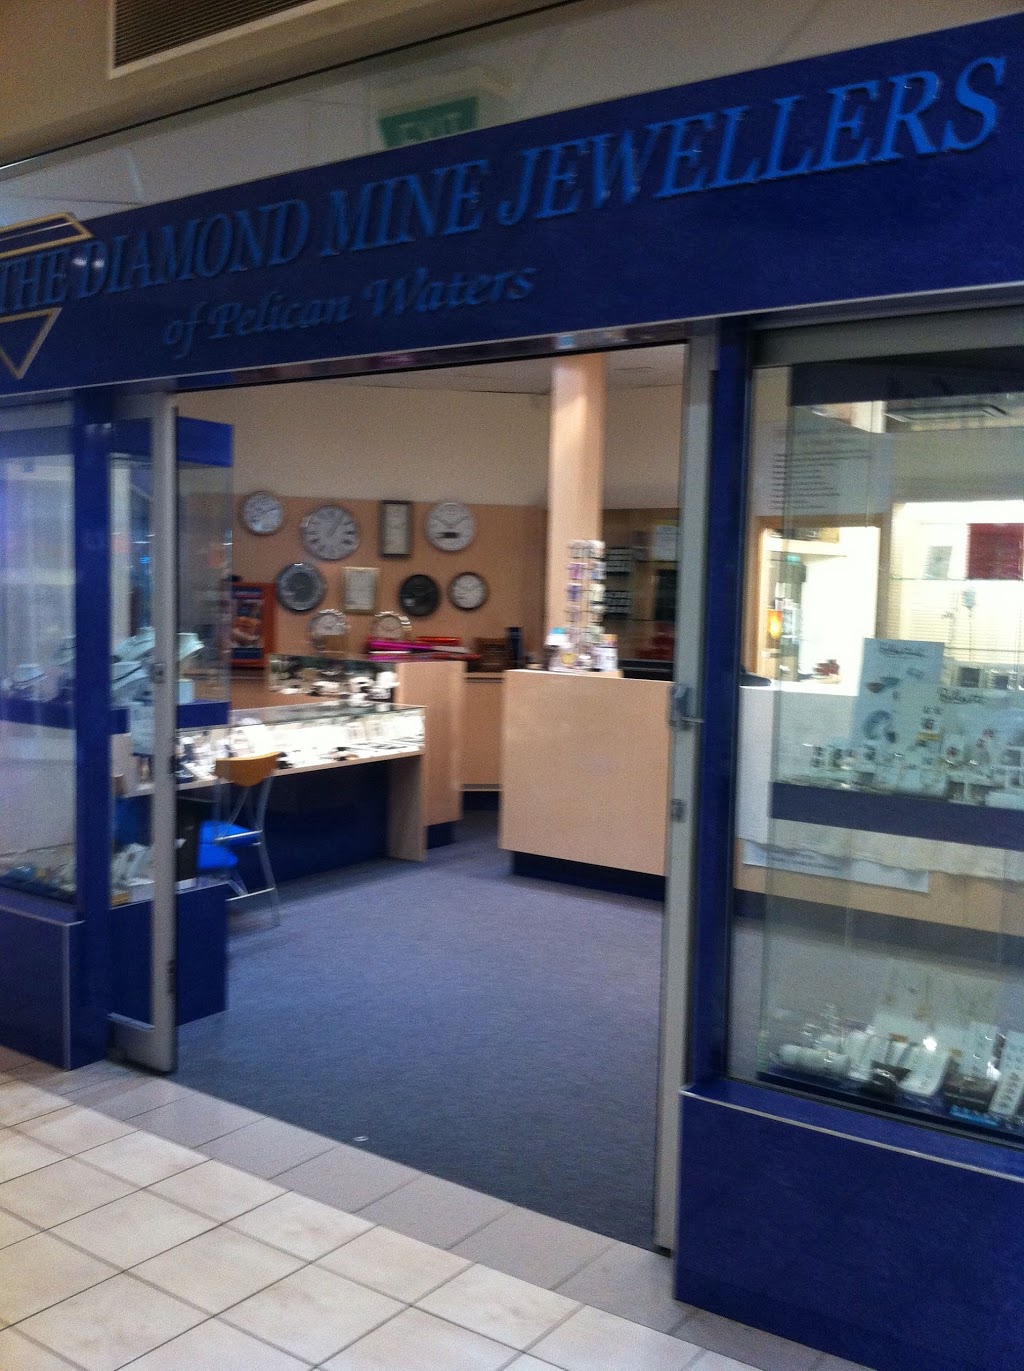 Diamond Mine Jewellers of Pelican Waters | jewelry store | Pelican Waters Shopping Village, 5/44 Pelican Waters Blvd, Pelican Waters QLD 4551, Australia | 0754924477 OR +61 7 5492 4477